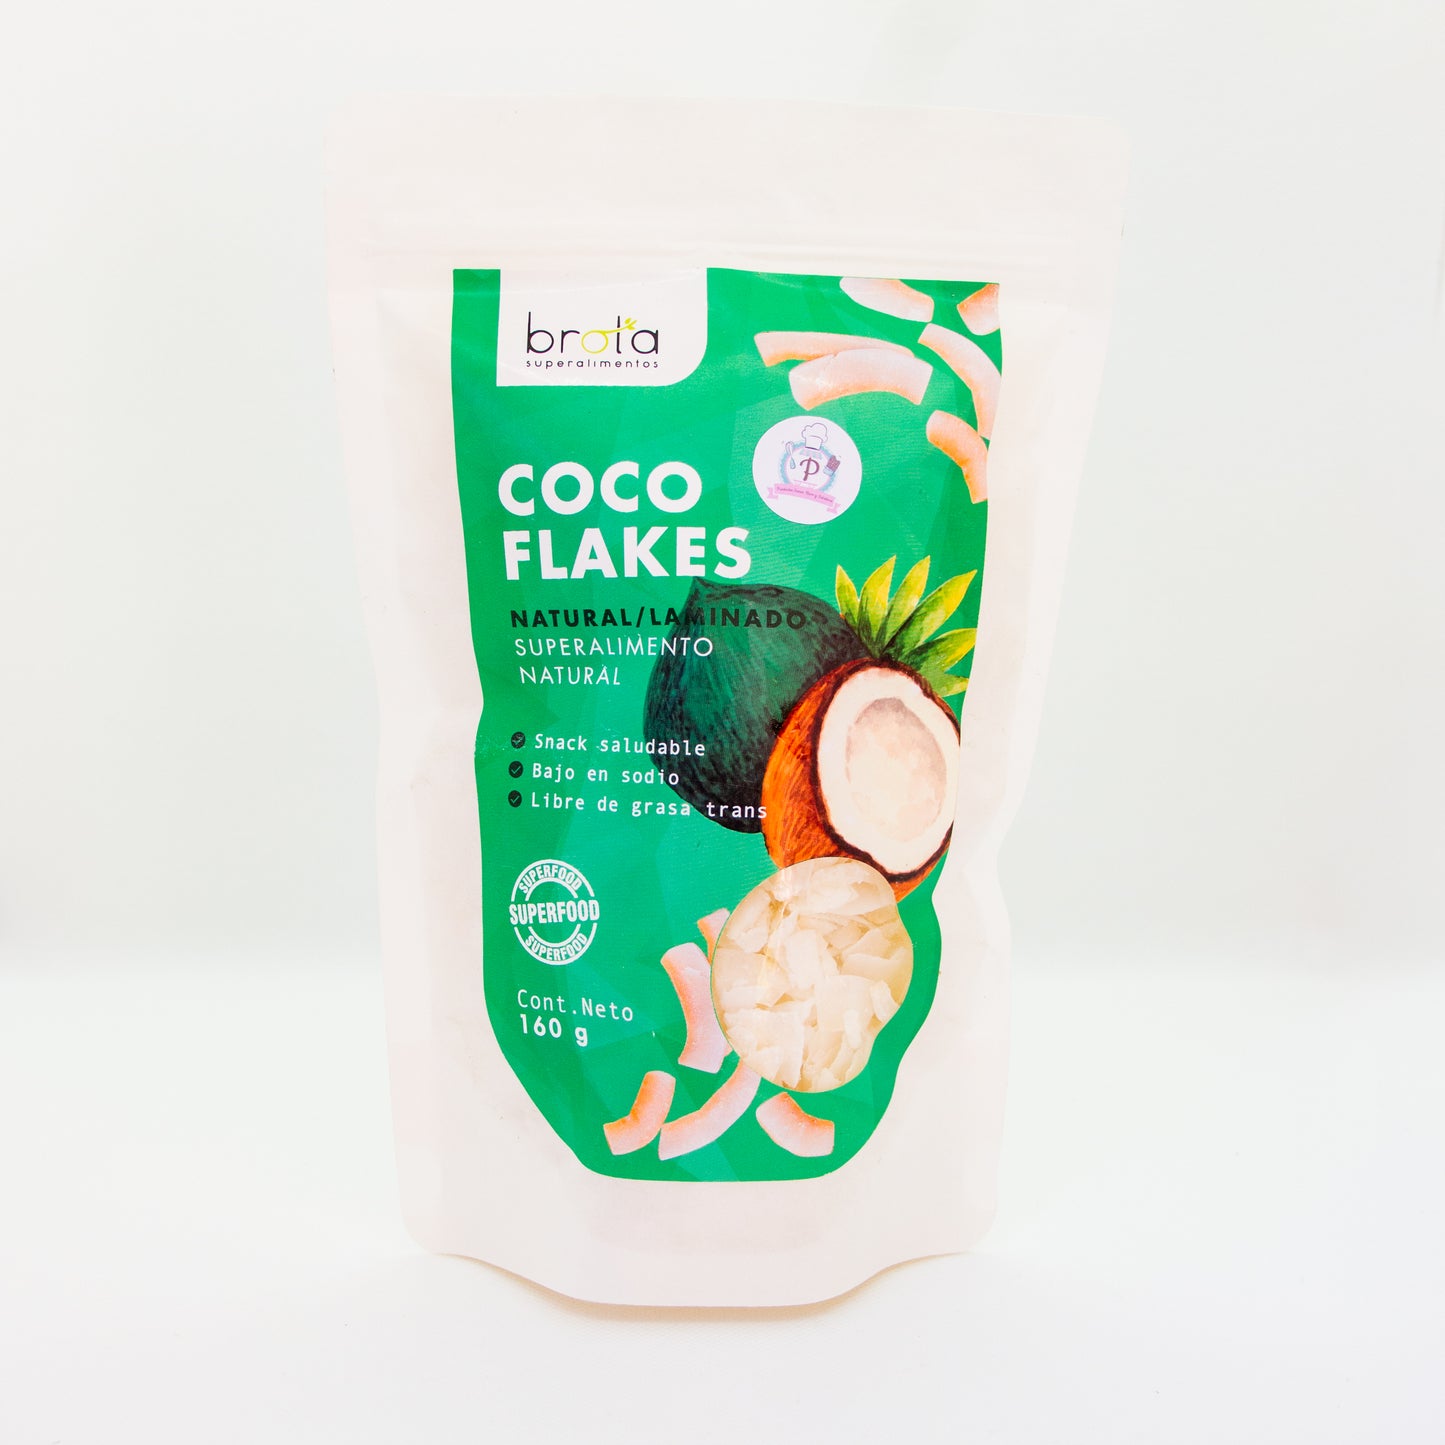 Coco flakes laminado "Brota"